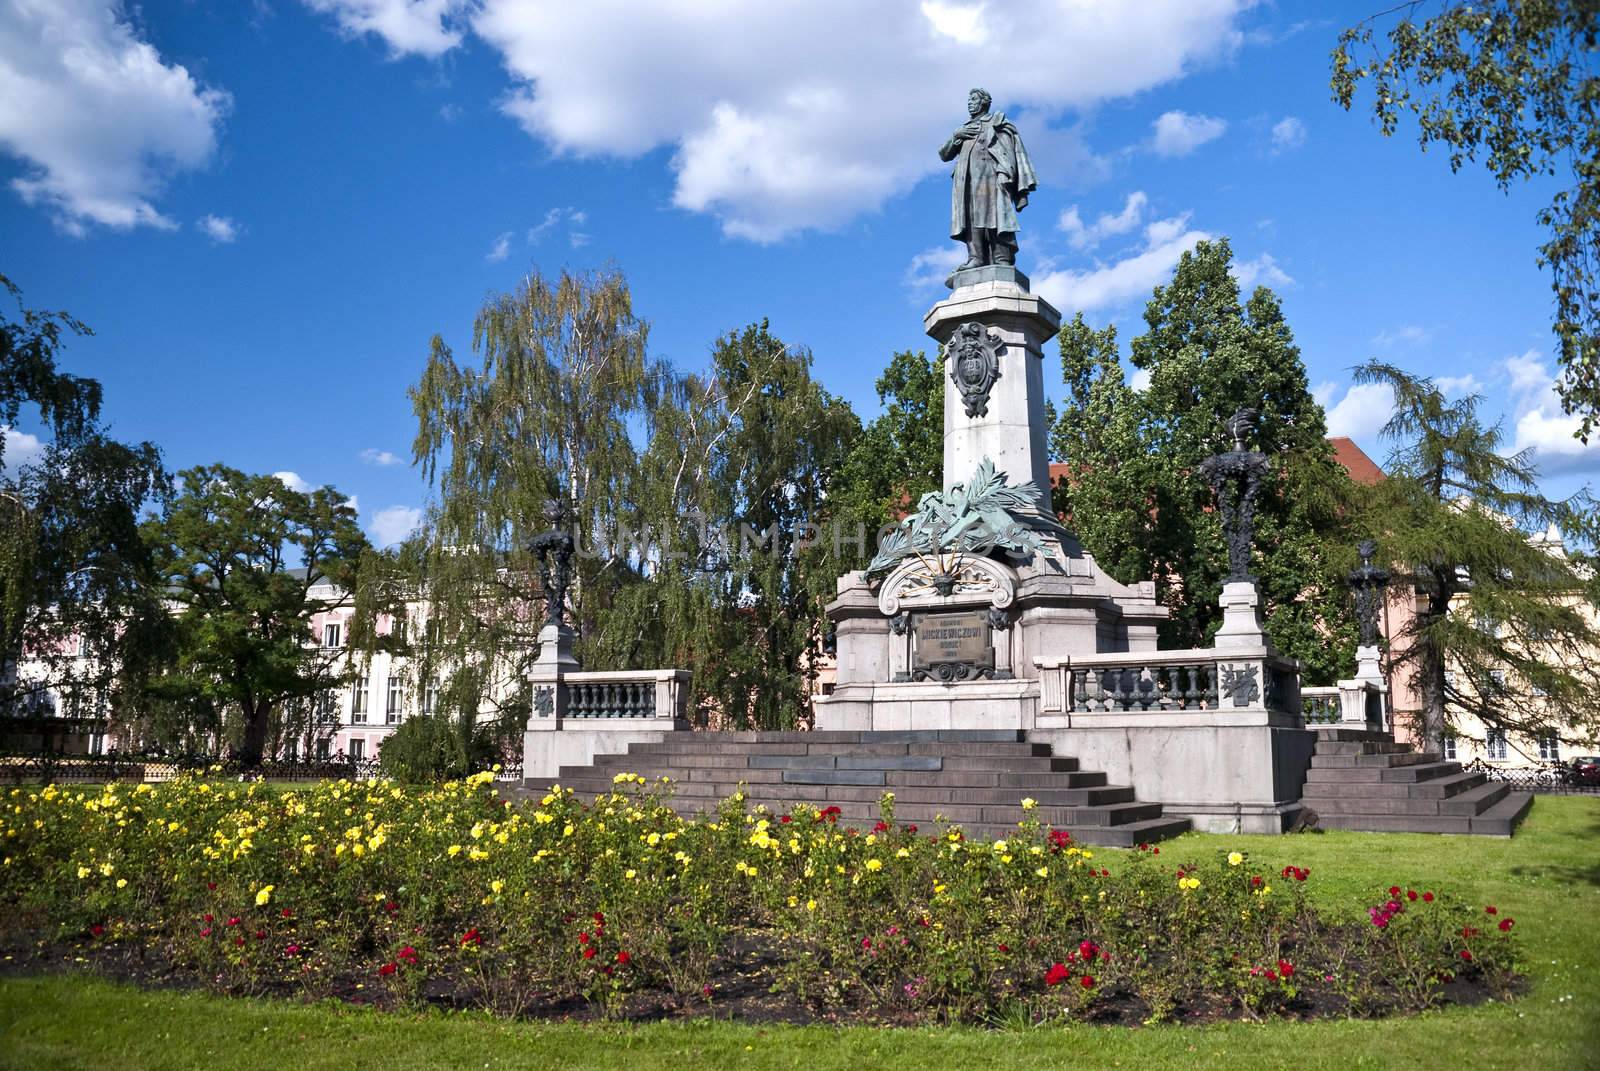 Statue of Adam Mickiewicz in Warsaw, Poland